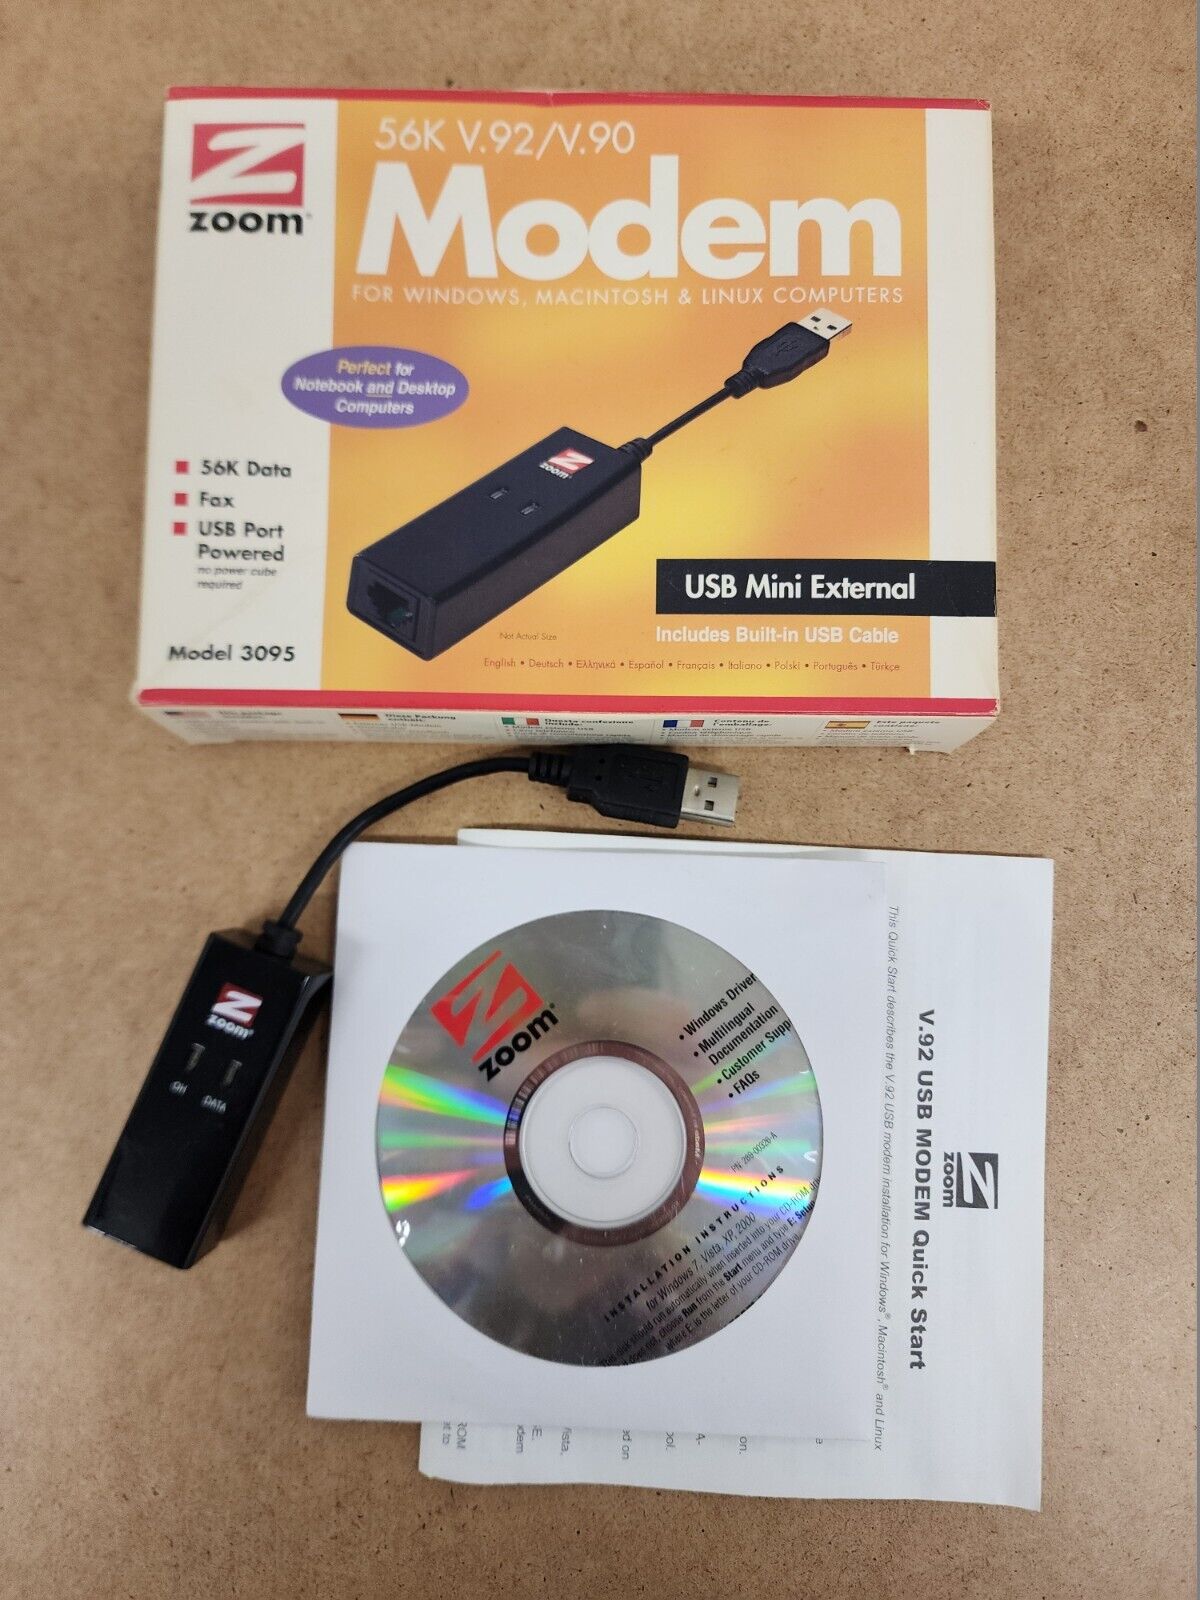  Zoom Model 3095 USB Modem 56K V.92 Data Fax Dial-Up Windows Macintosh  Linux Co